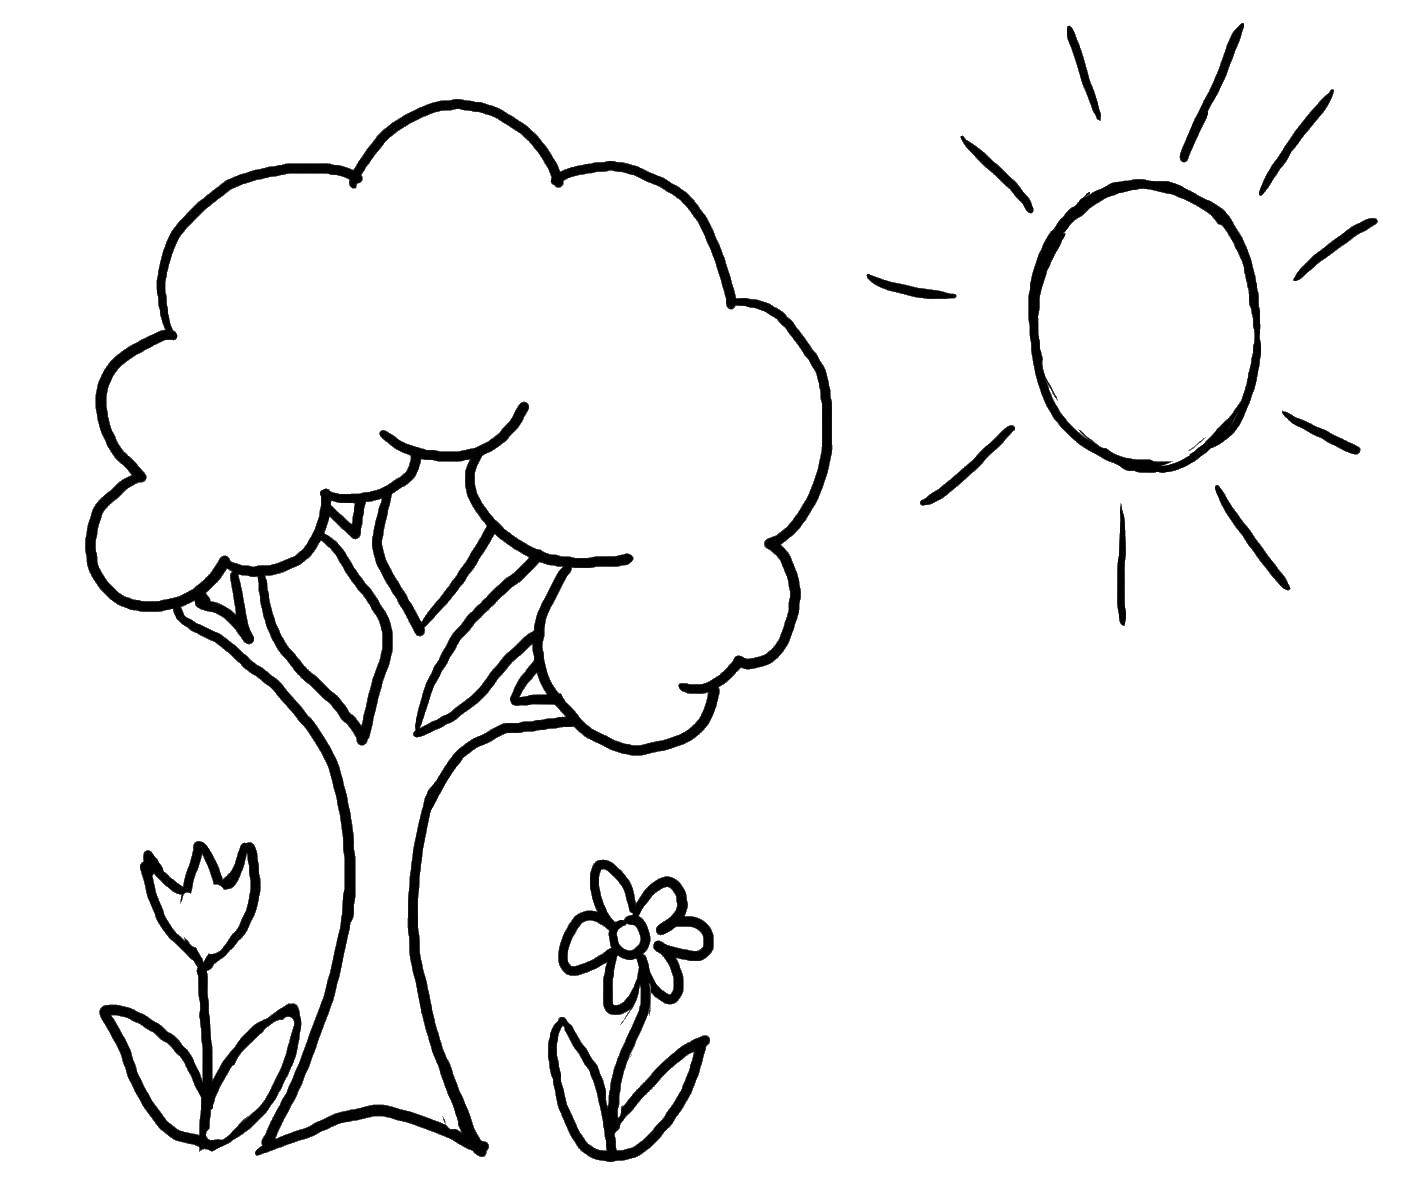 Название: Раскраска Дерево и солнышко. Категория: Контур дерева. Теги: дерево, цветы, солнце.